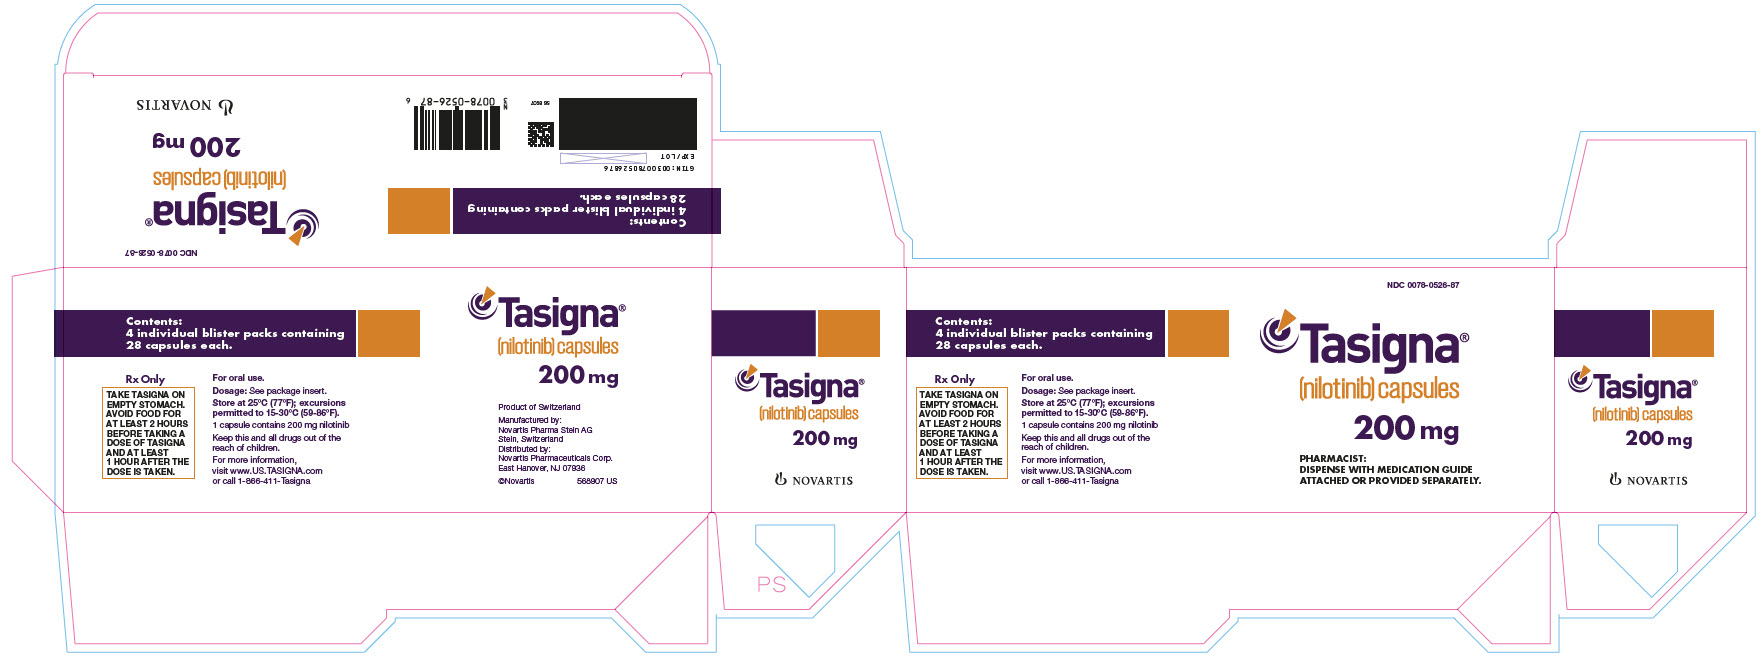 NDC: <a href=/NDC/0078-0526-87>0078-0526-87</a>
Tasigna
(nilotinib) capsules
200 mg
							